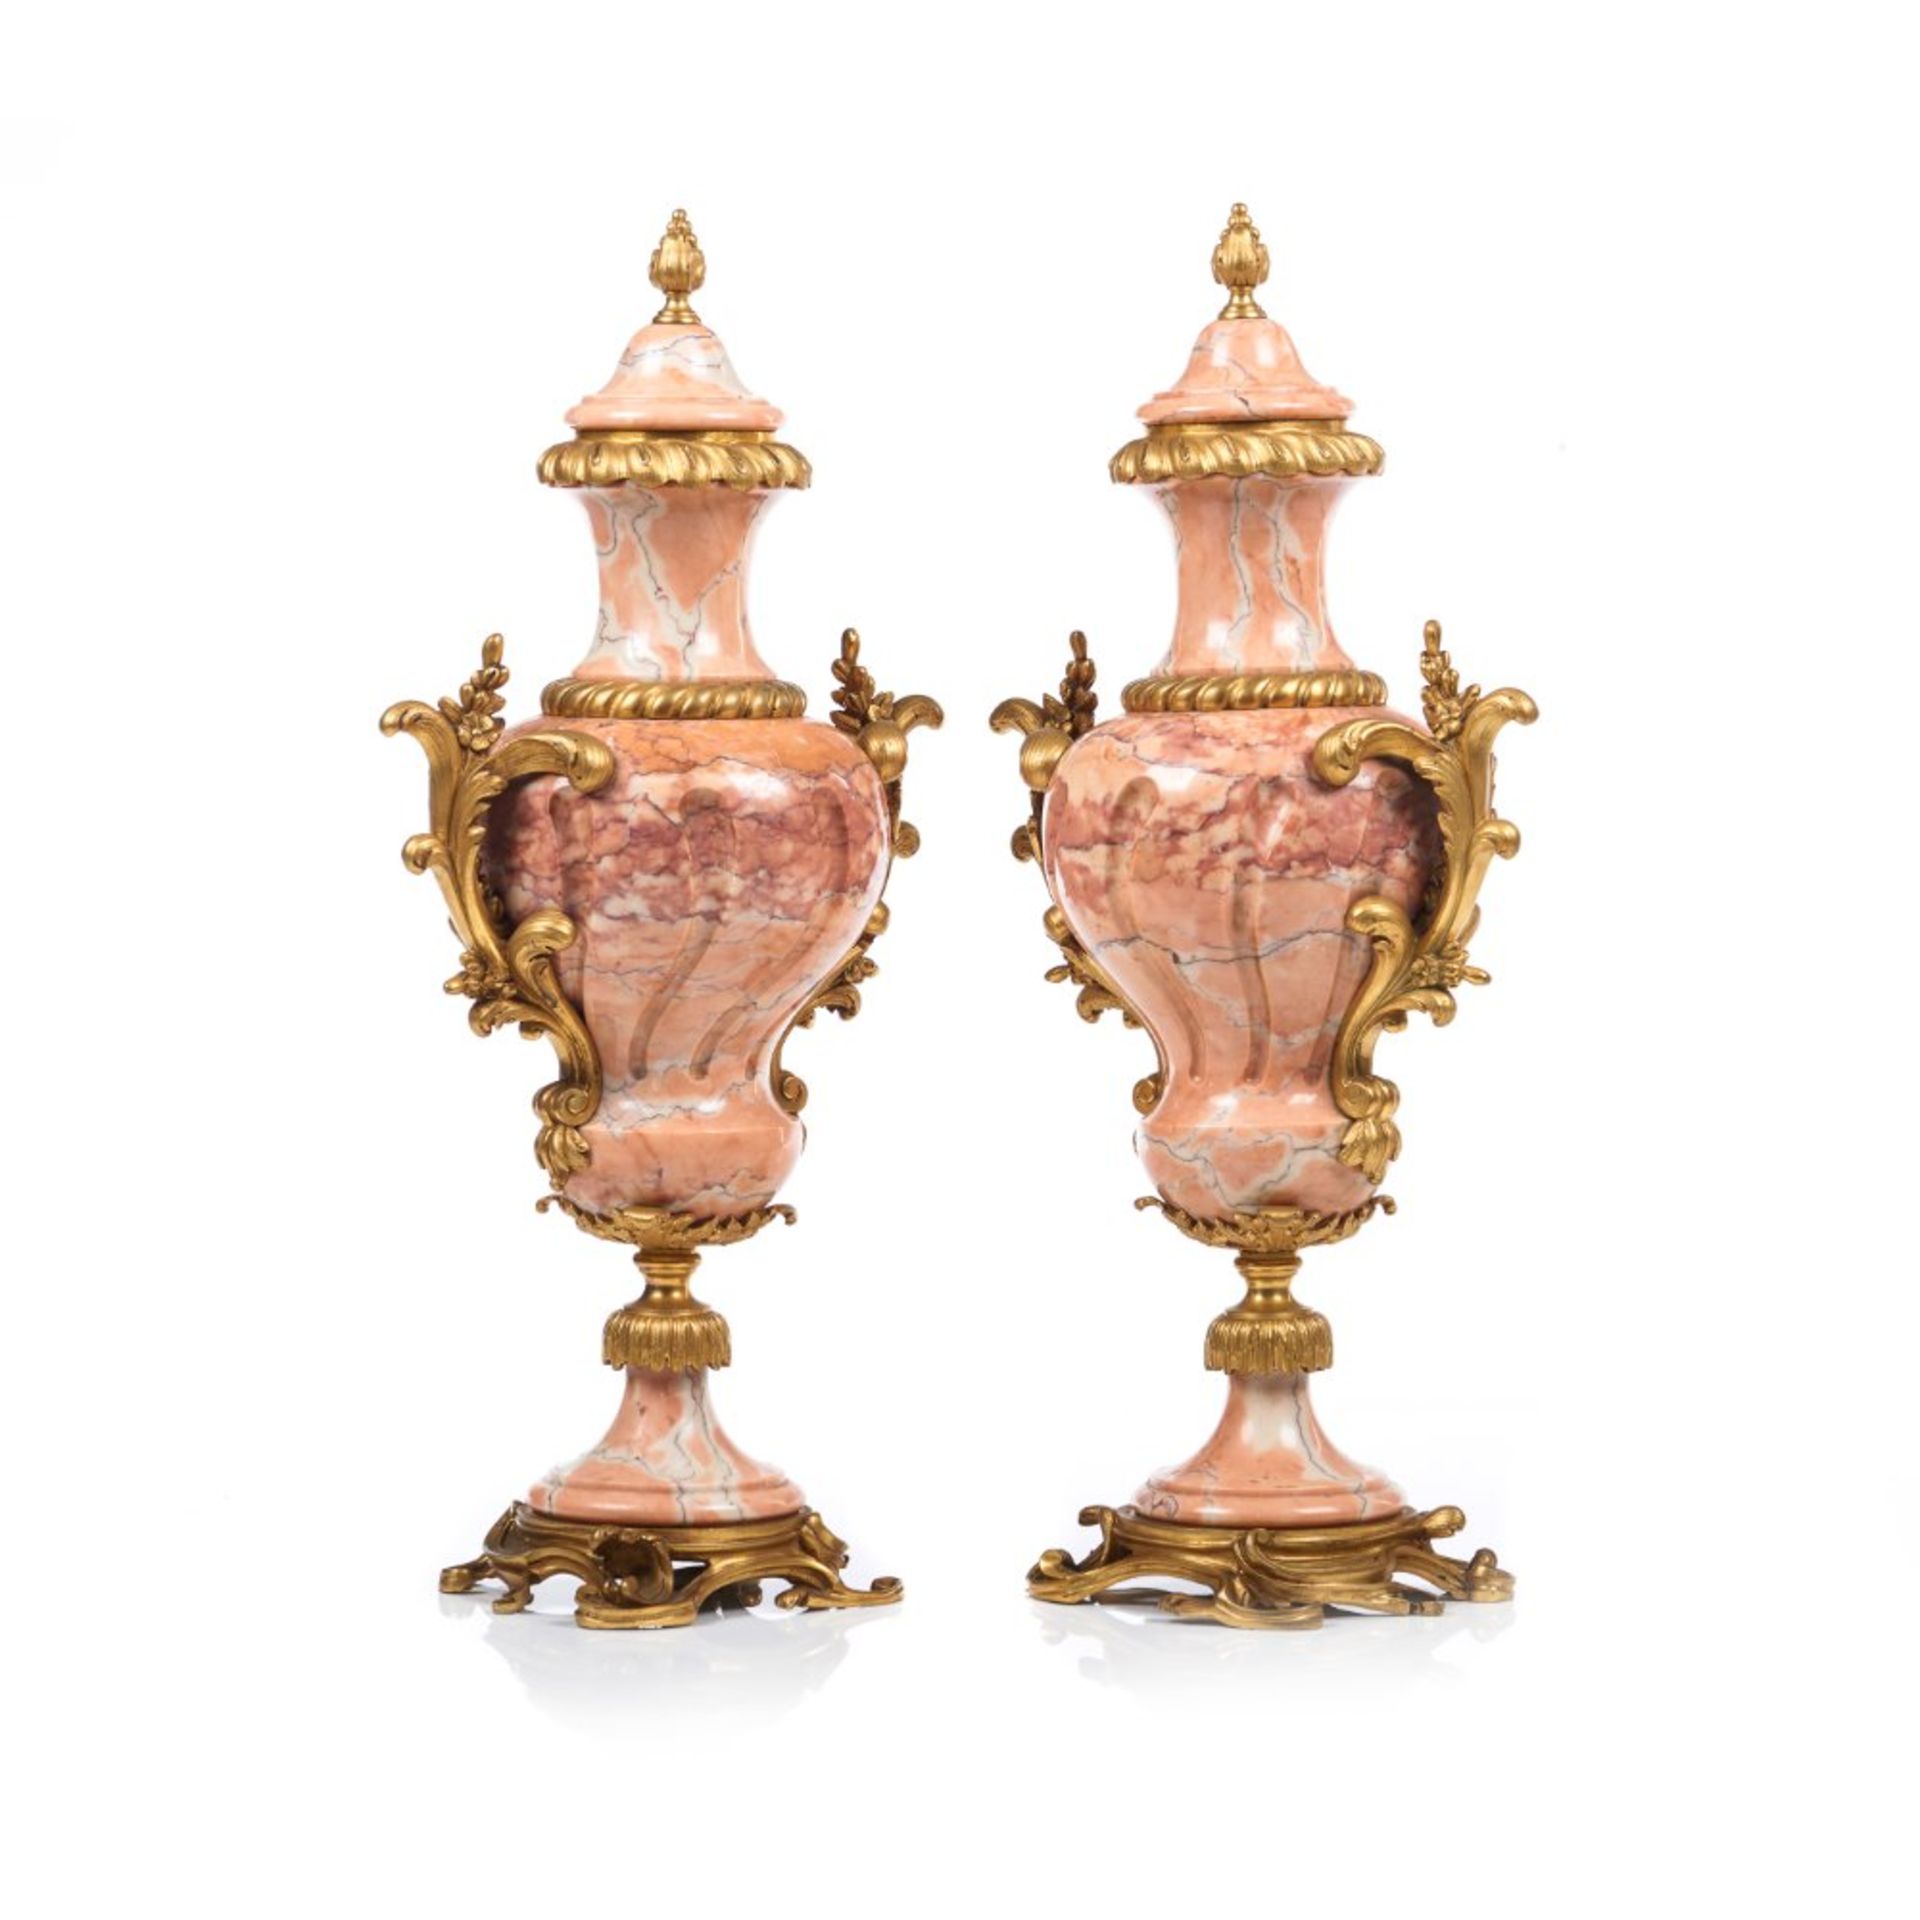 A Pair of Louis XVI style cassolettes